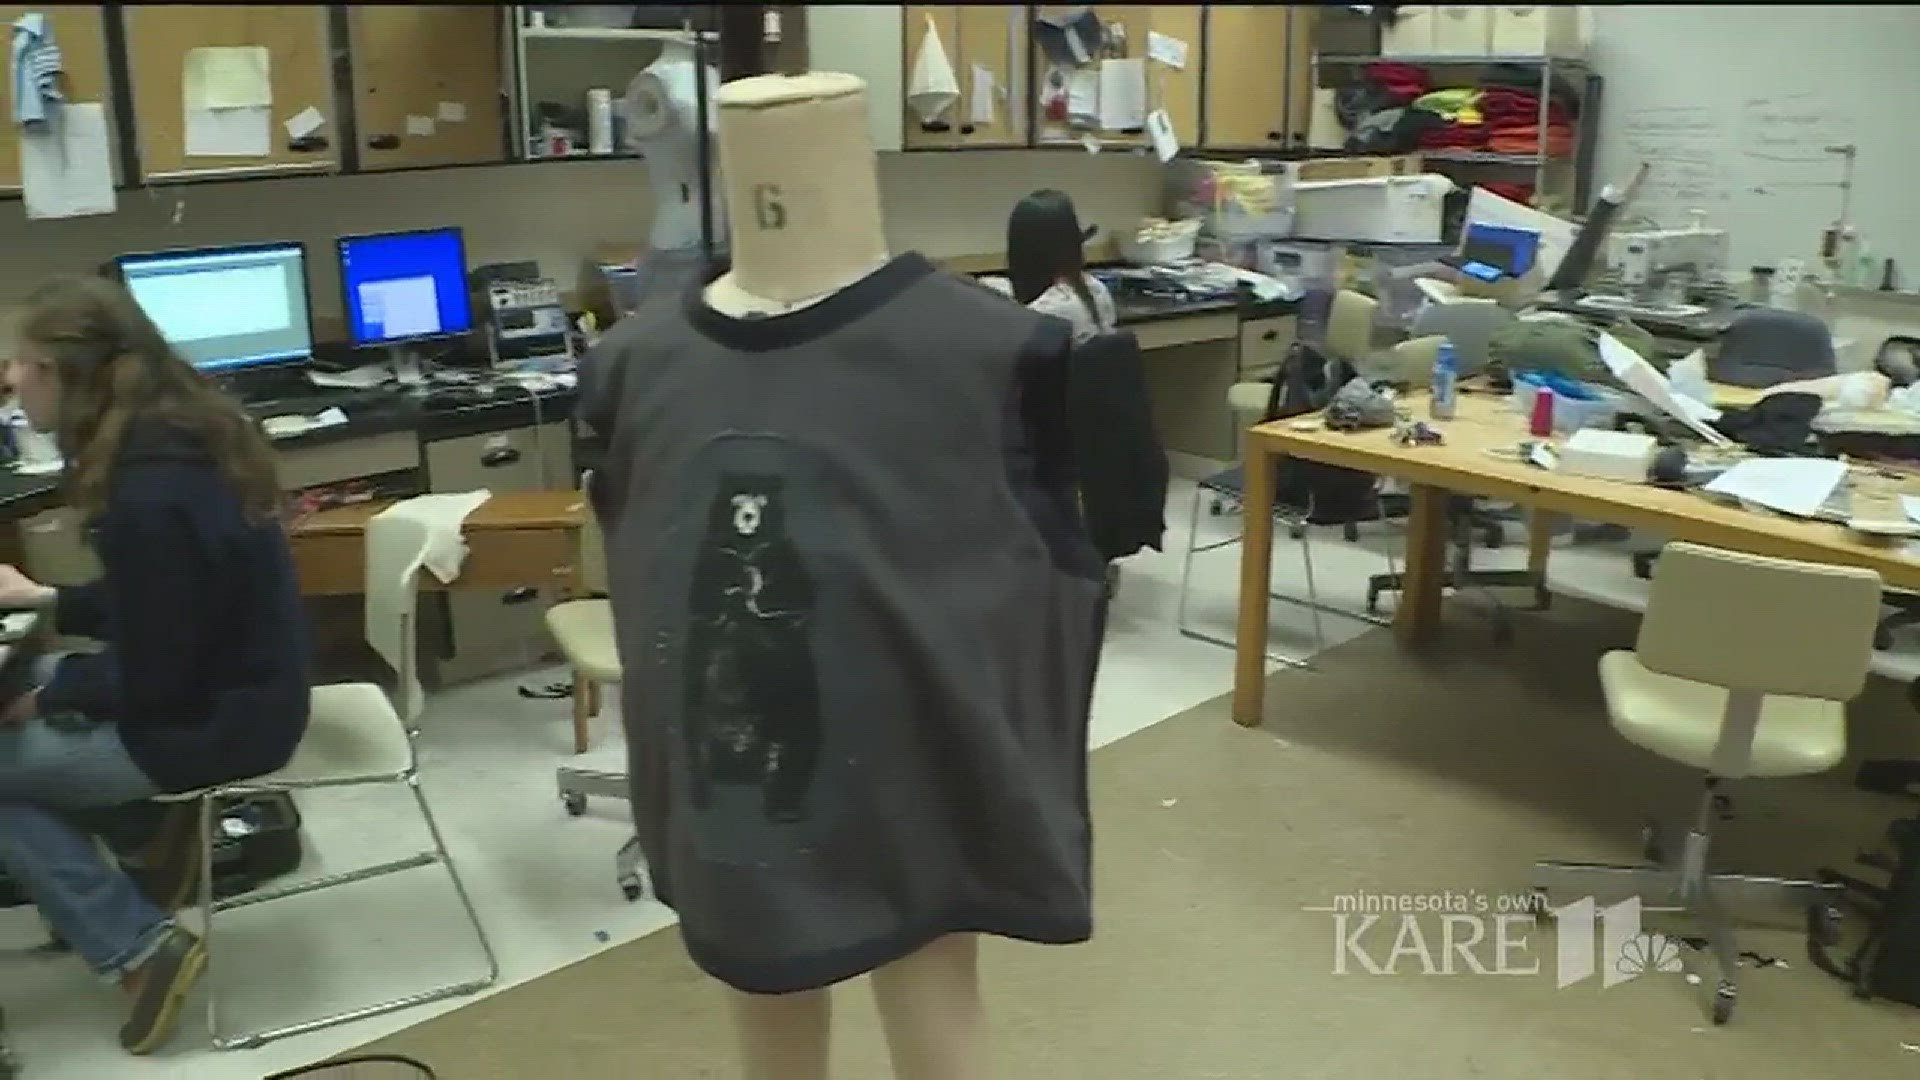 University of Minnesota develops wearable technology to help autism